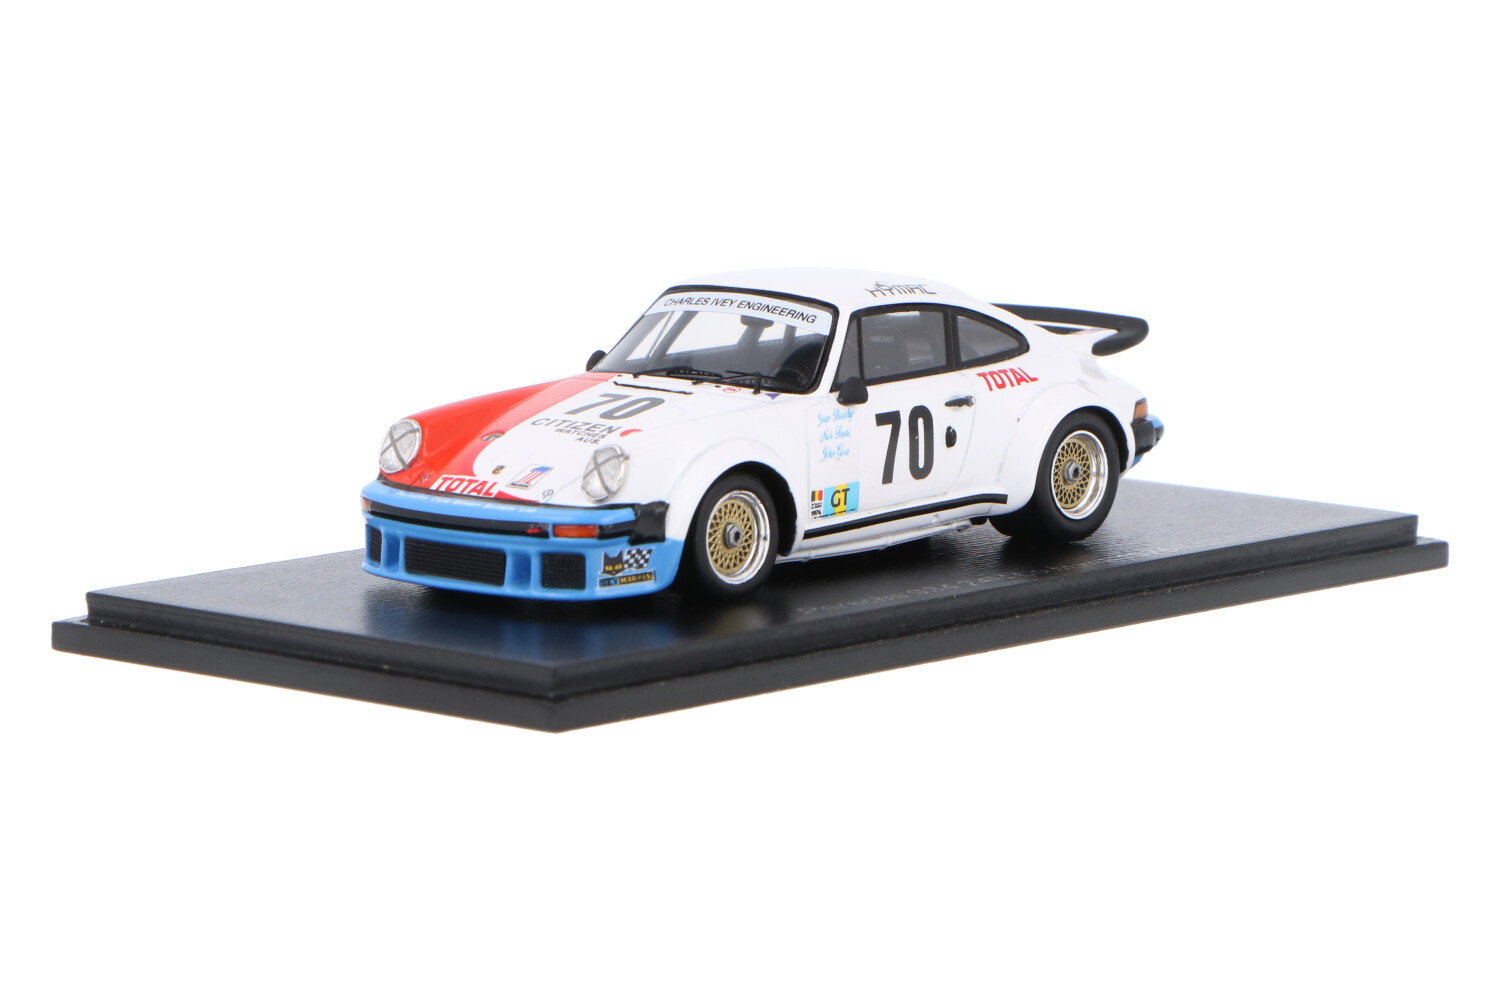 Porsche/Auto Union 911 (934) - Modelauto schaal 1:43